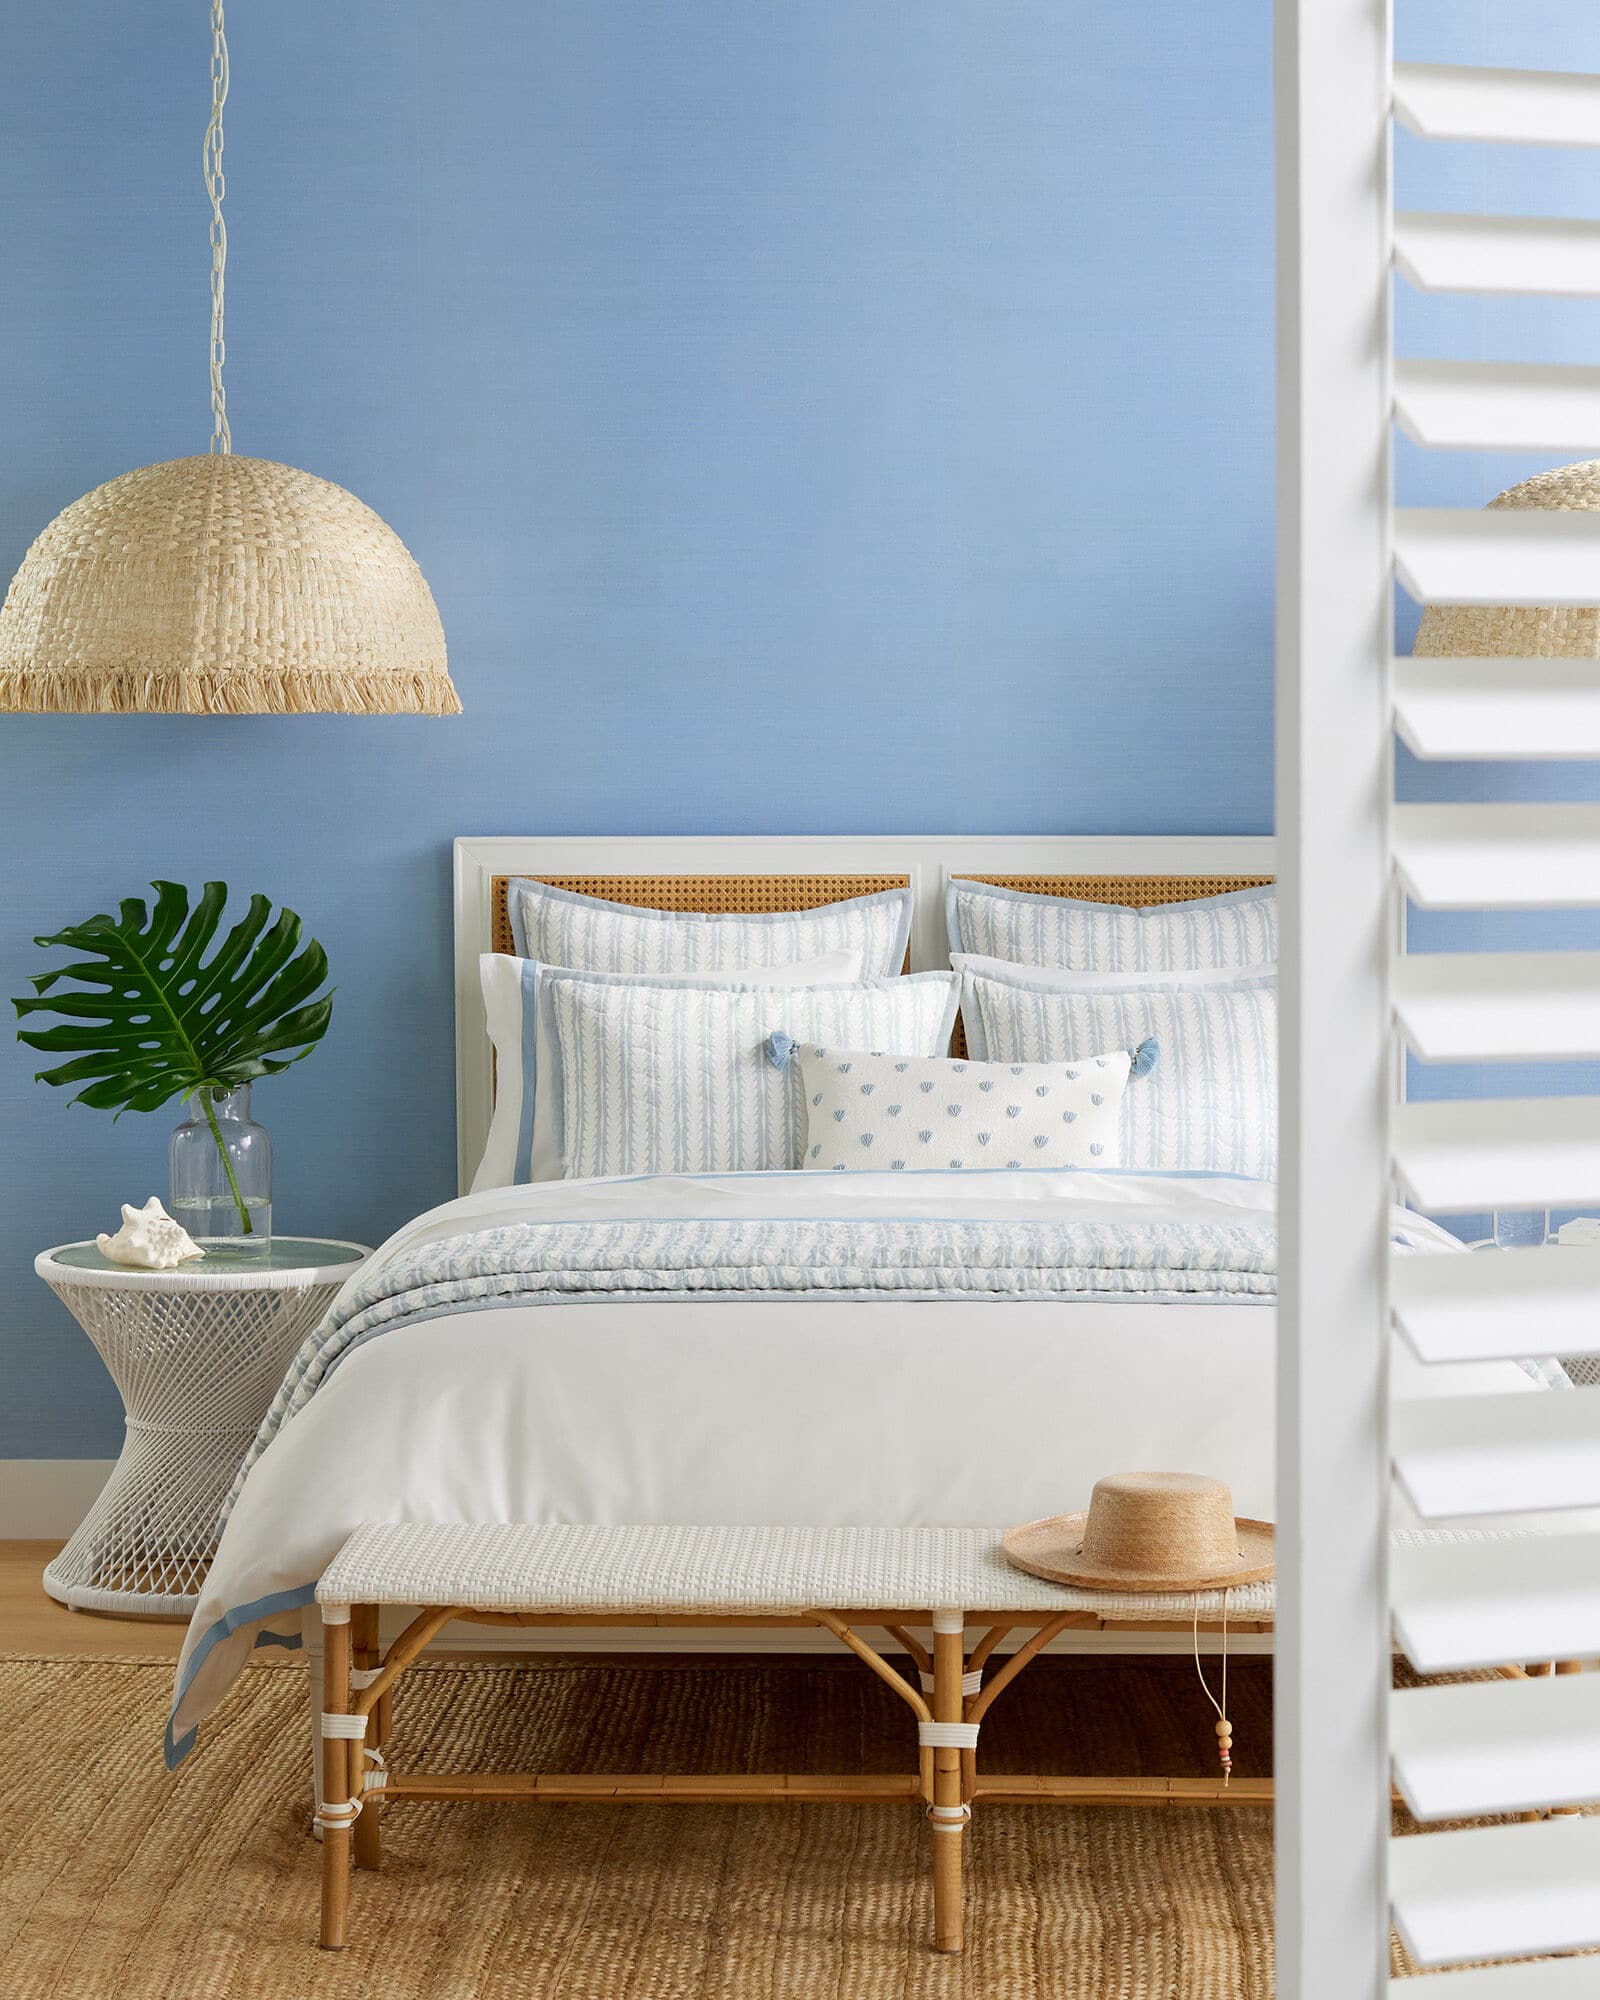 Serena & Lily in blue and white bedroom - seagrass chandelier - elegant bedroom - bedroom decor - bedroom design